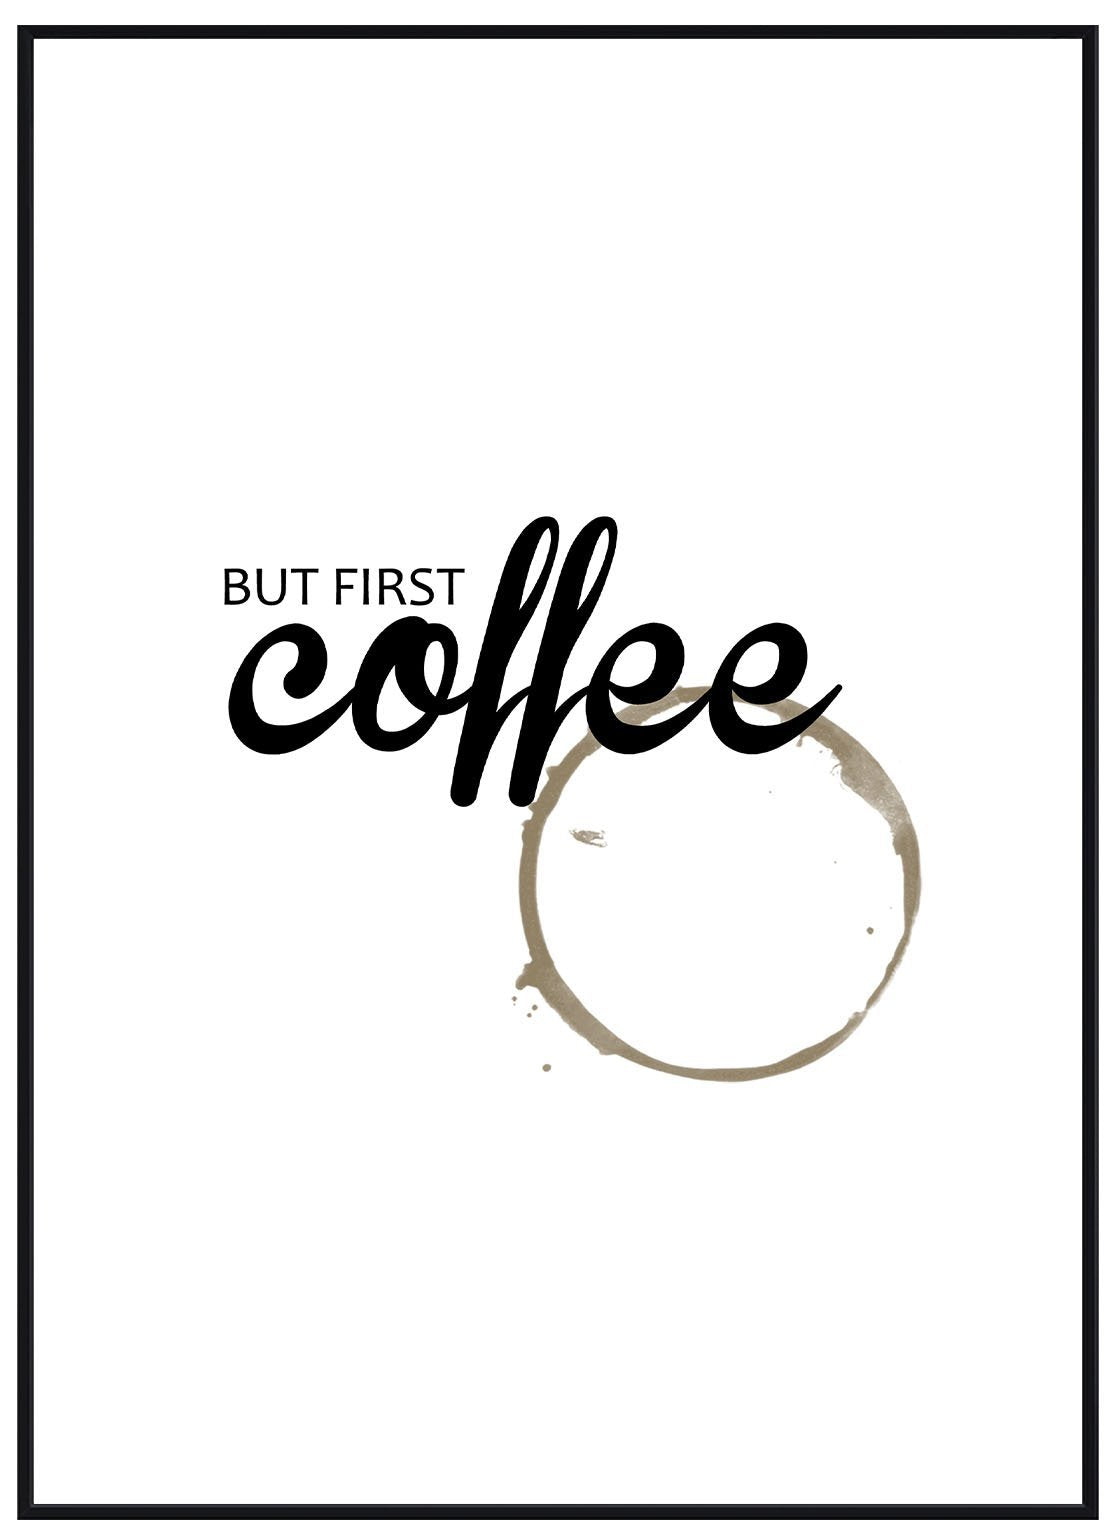 First Cofee - Avemfactory